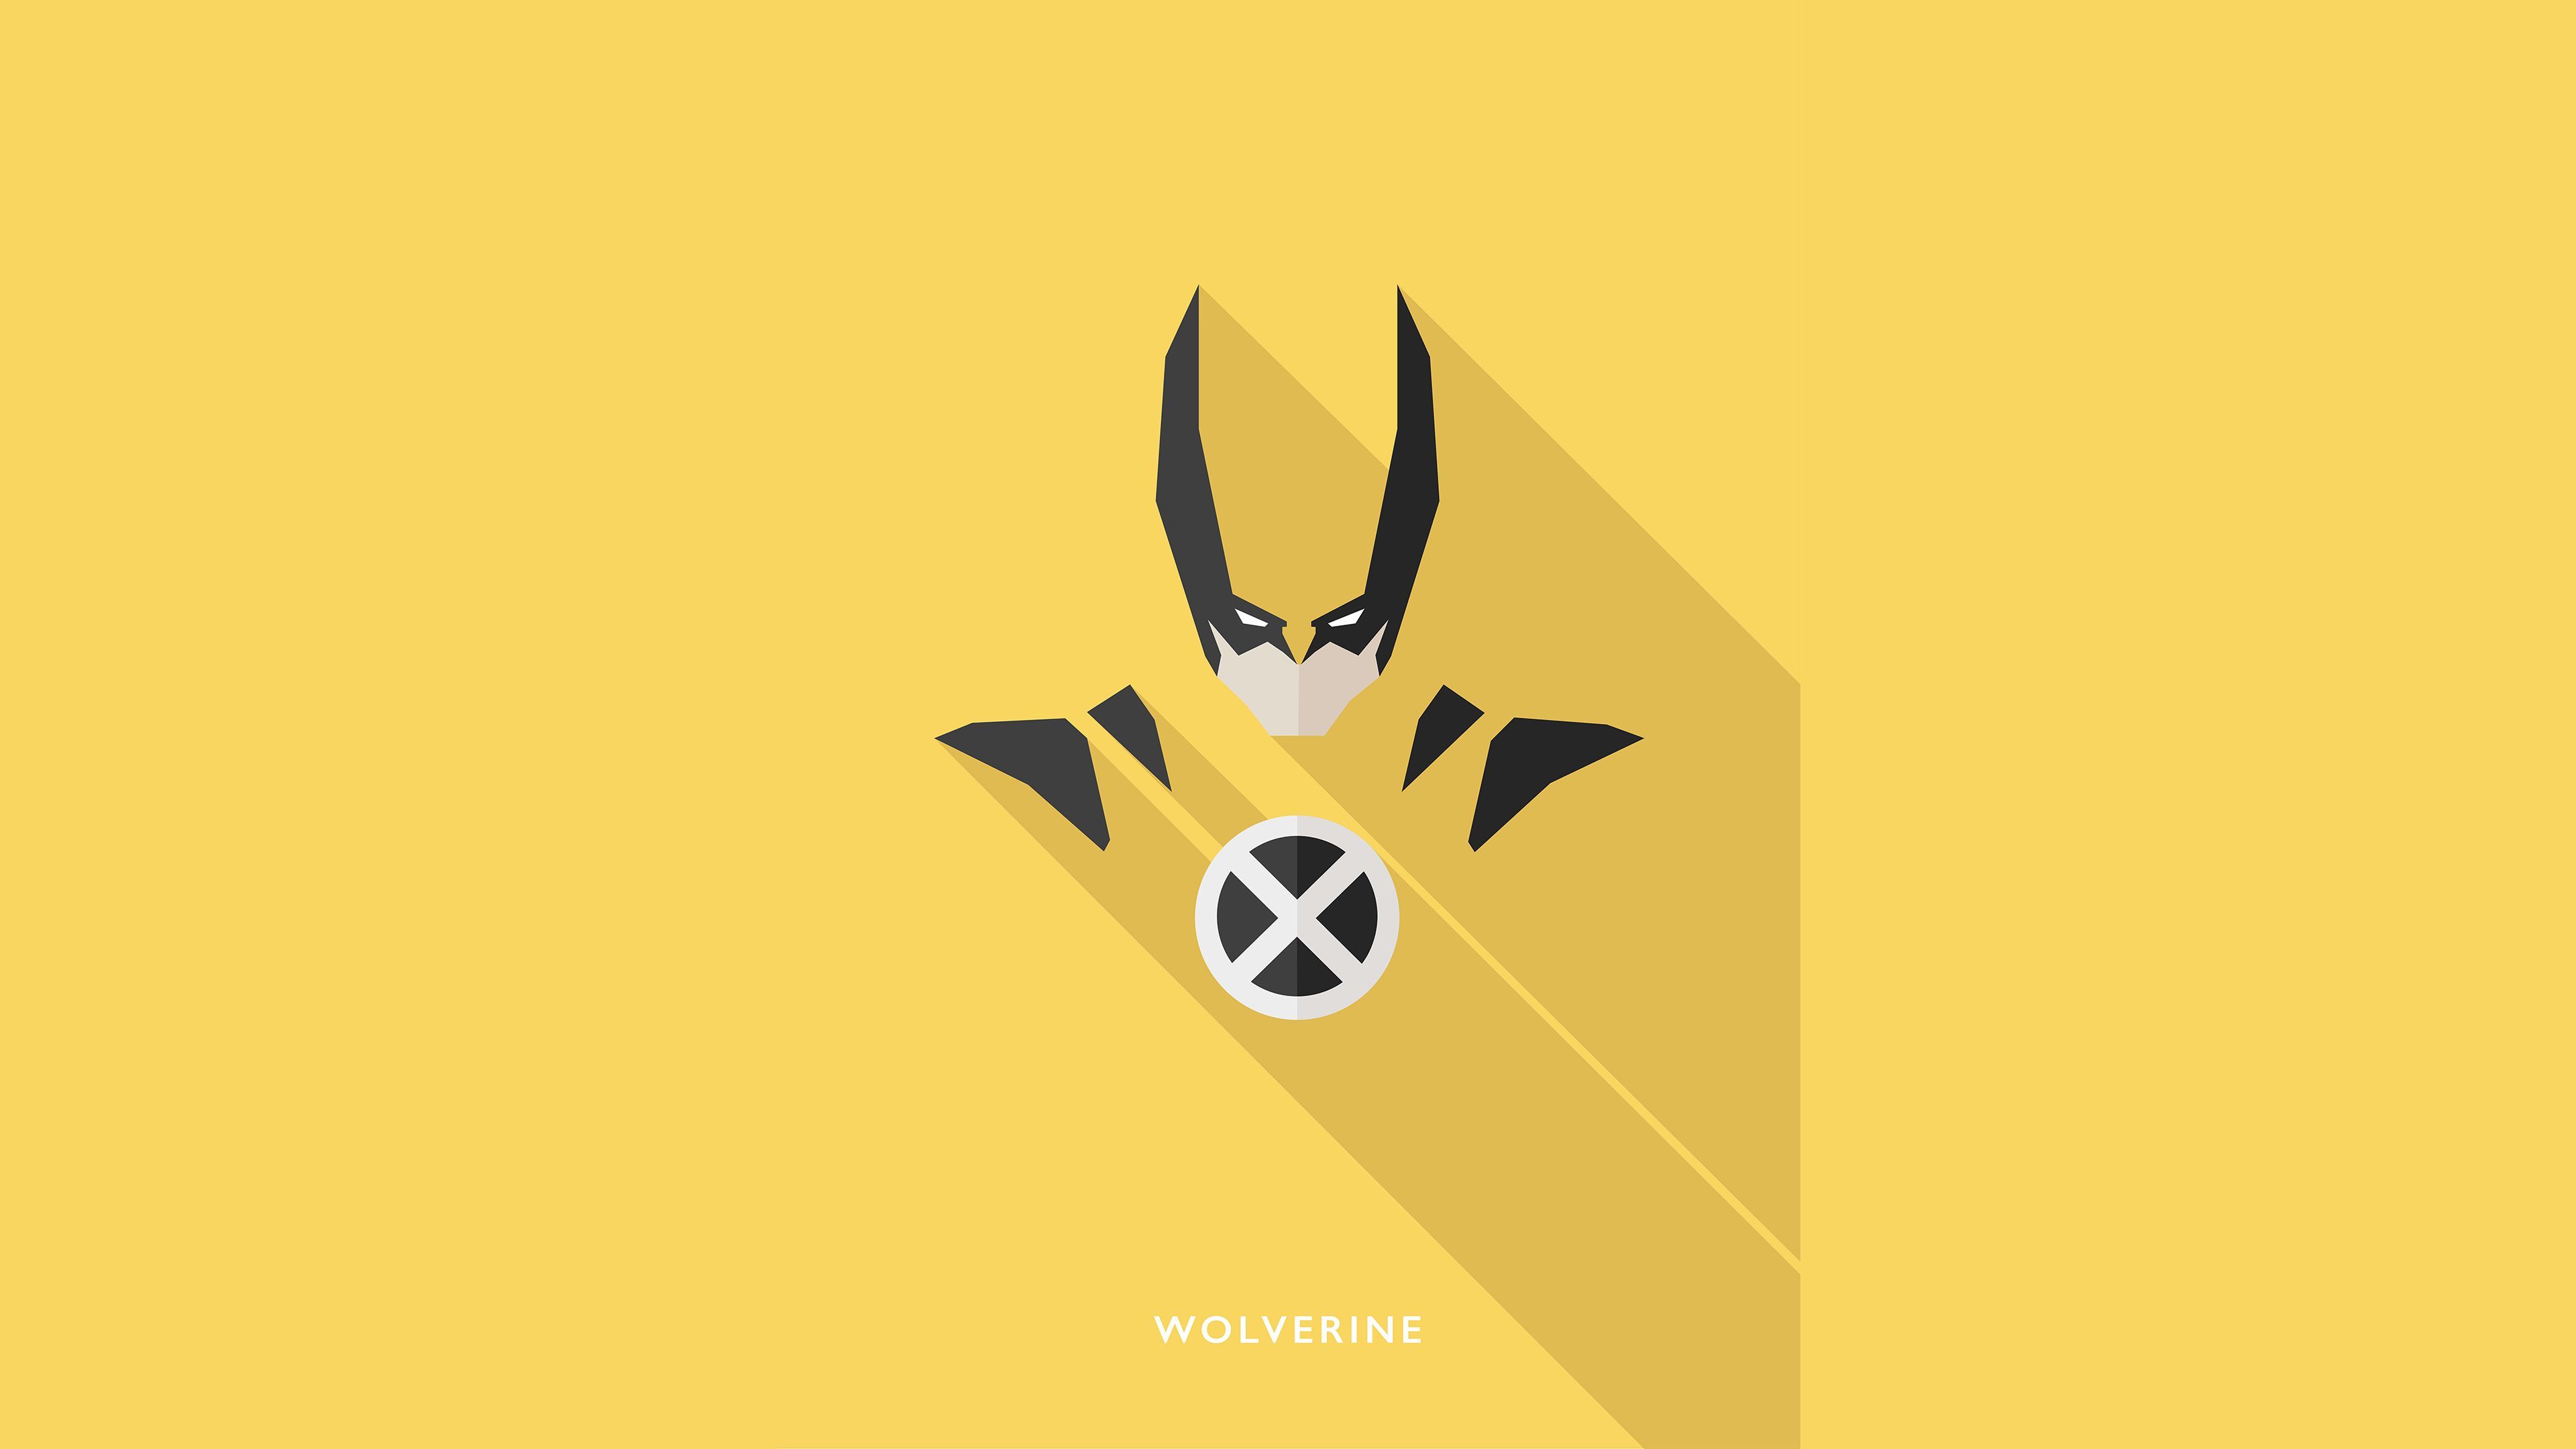 Wolverine Minimalist 4k wolverine wallpaper, superheroes